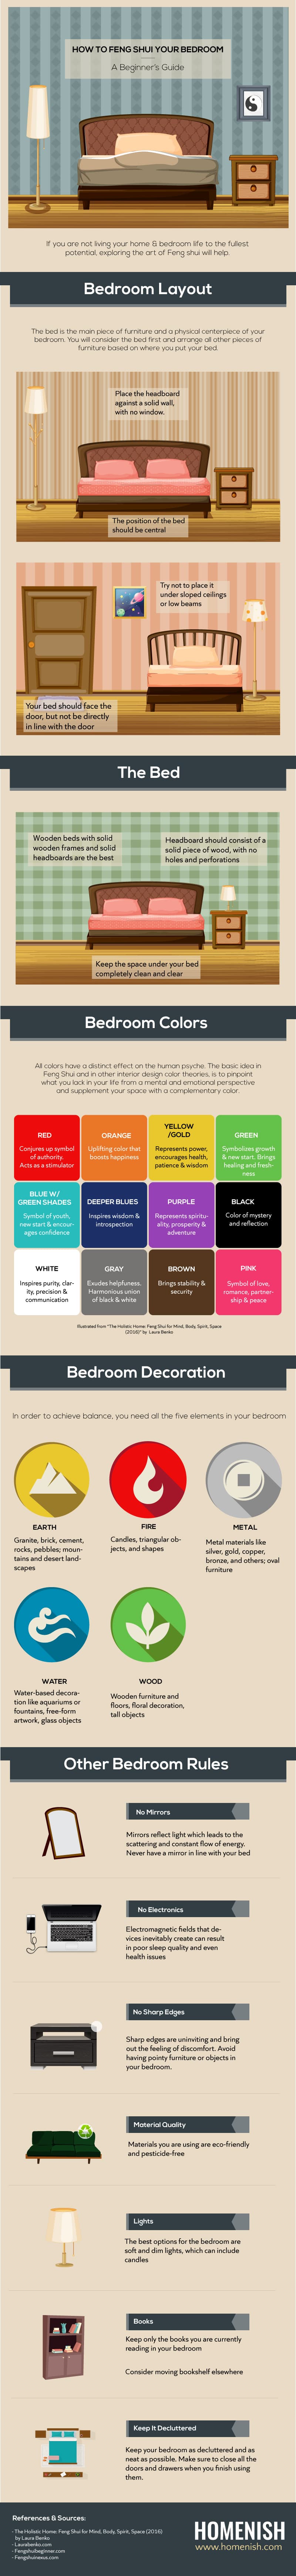 Feng shui bedroom infographic